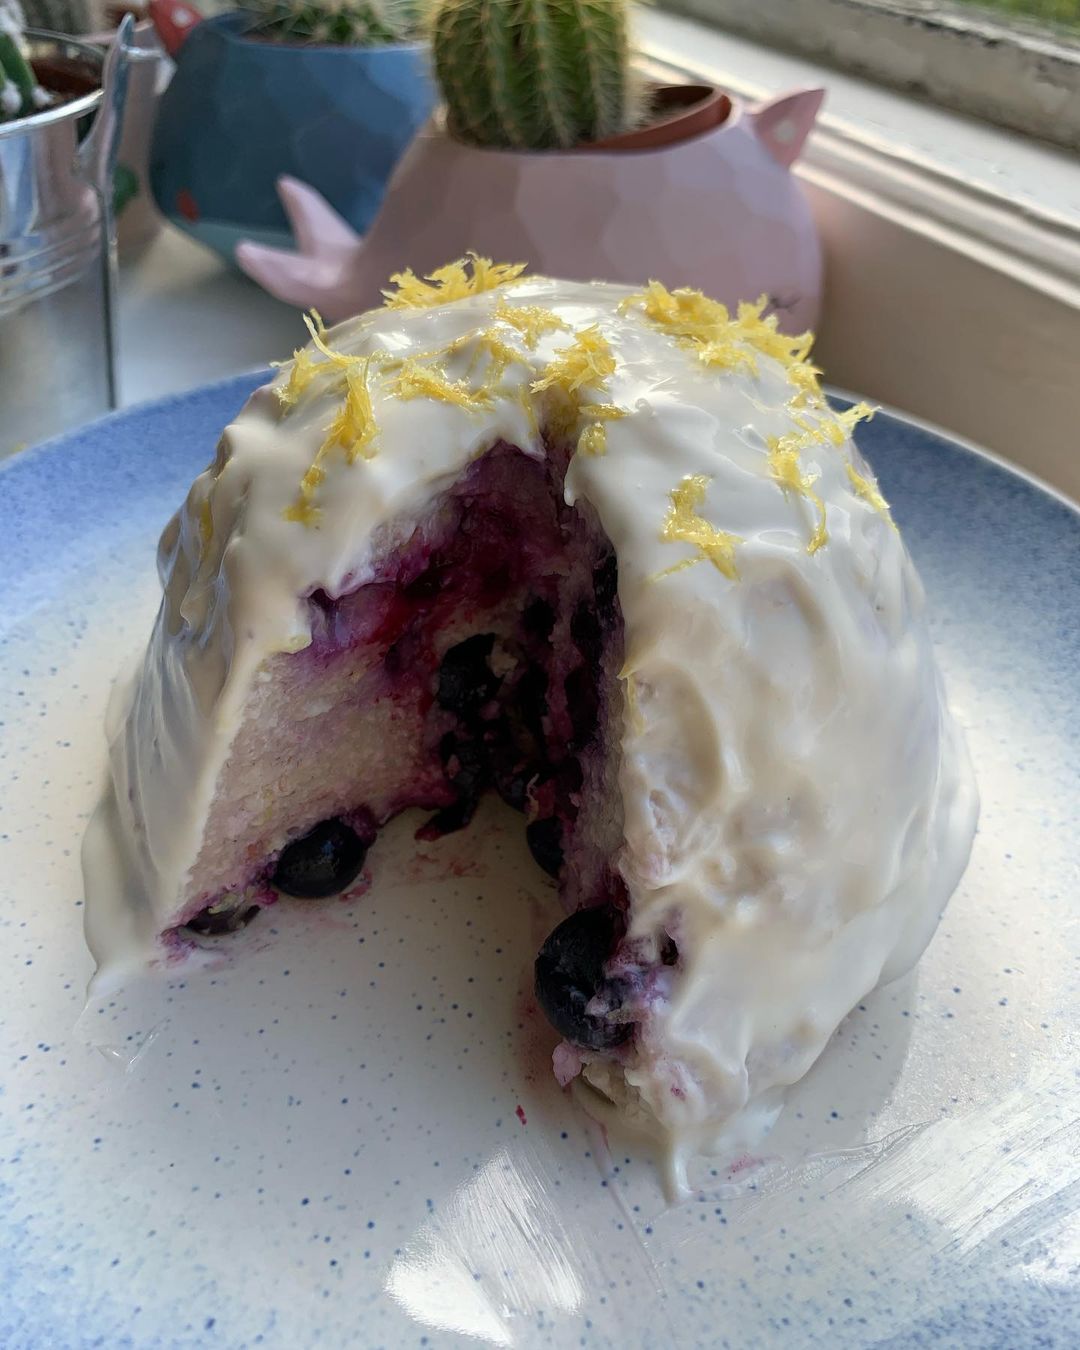 Blueberry & Lemon Breakfast ‘Cheesecake